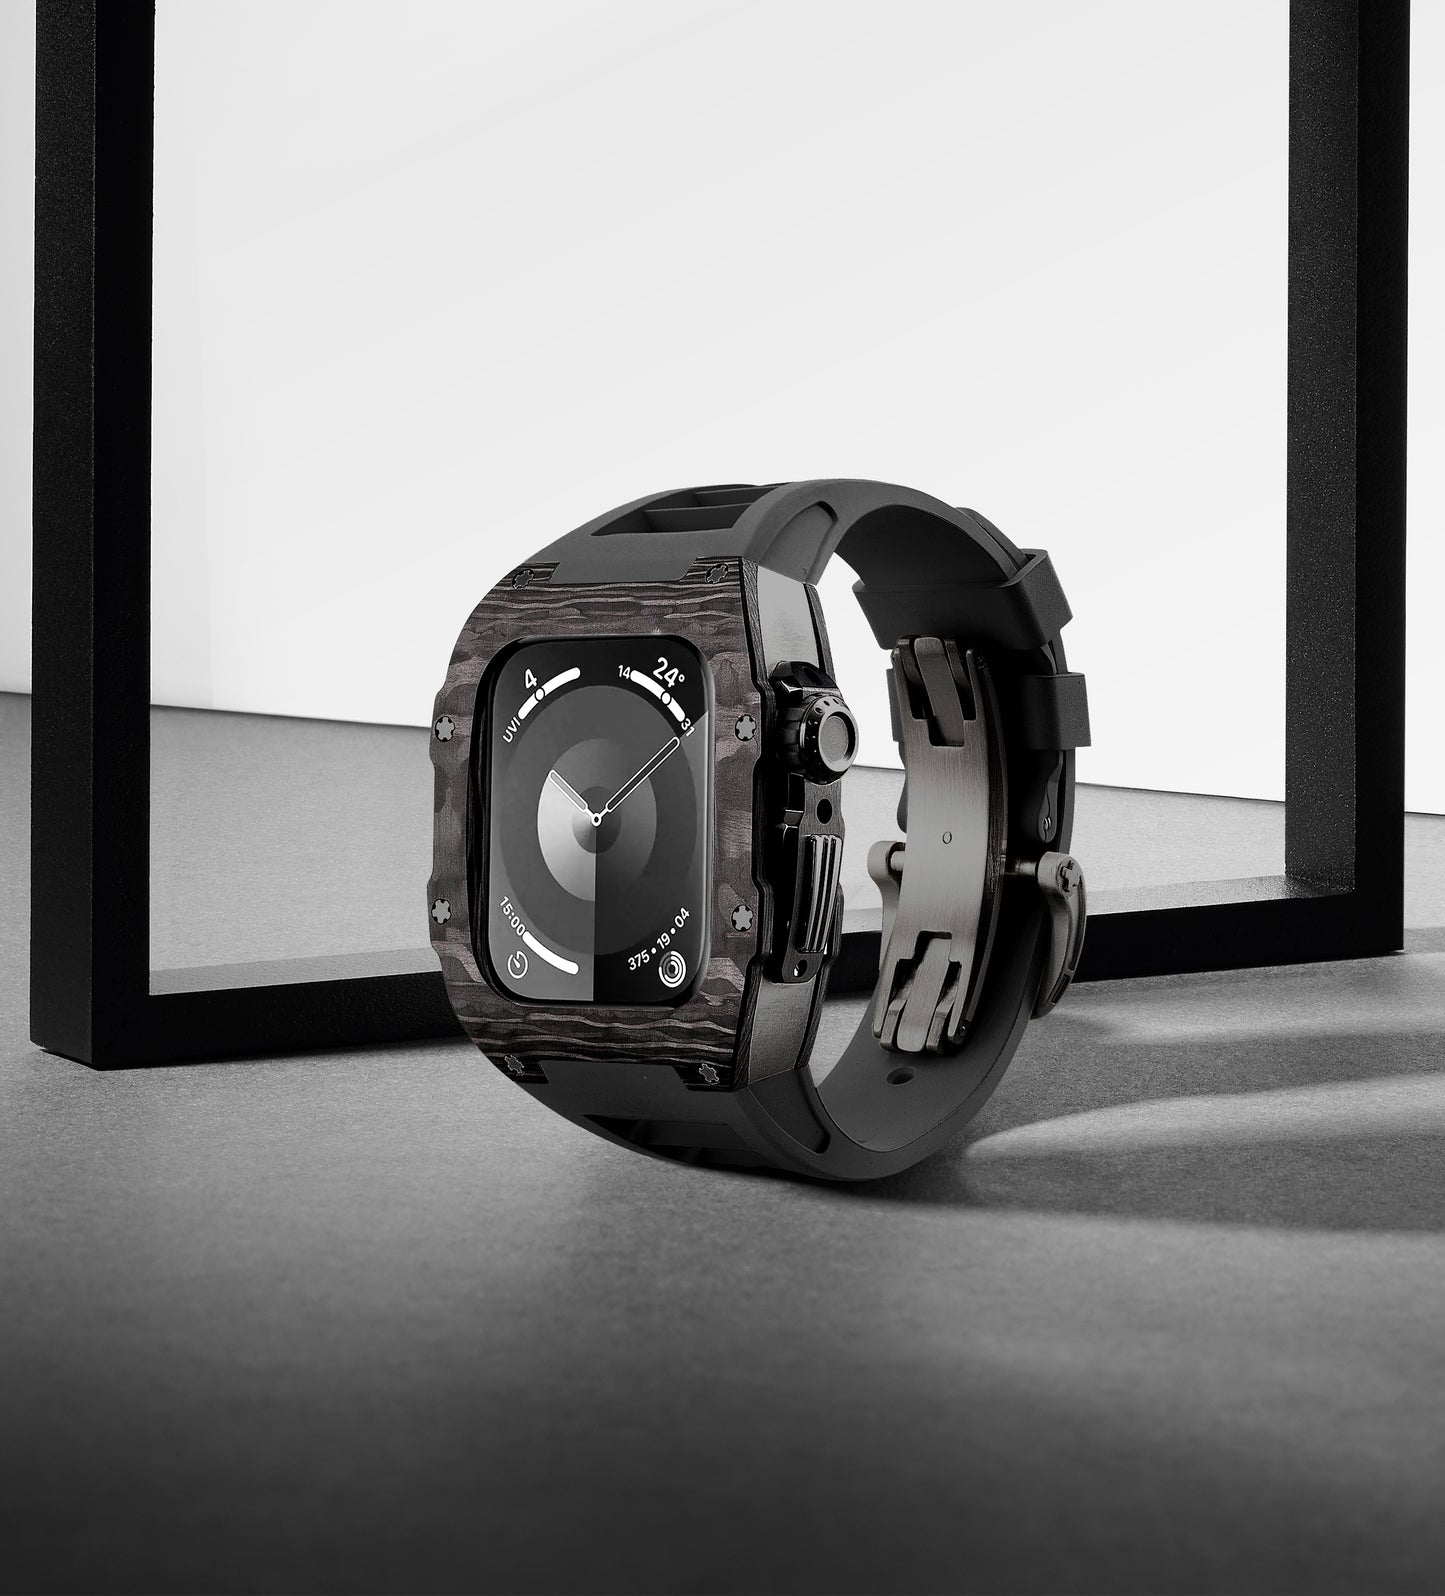 Apple Watch Case for Series 4/5/6/7/8/SE - Carbon Fiber Ti Case + White Fluoro Strap